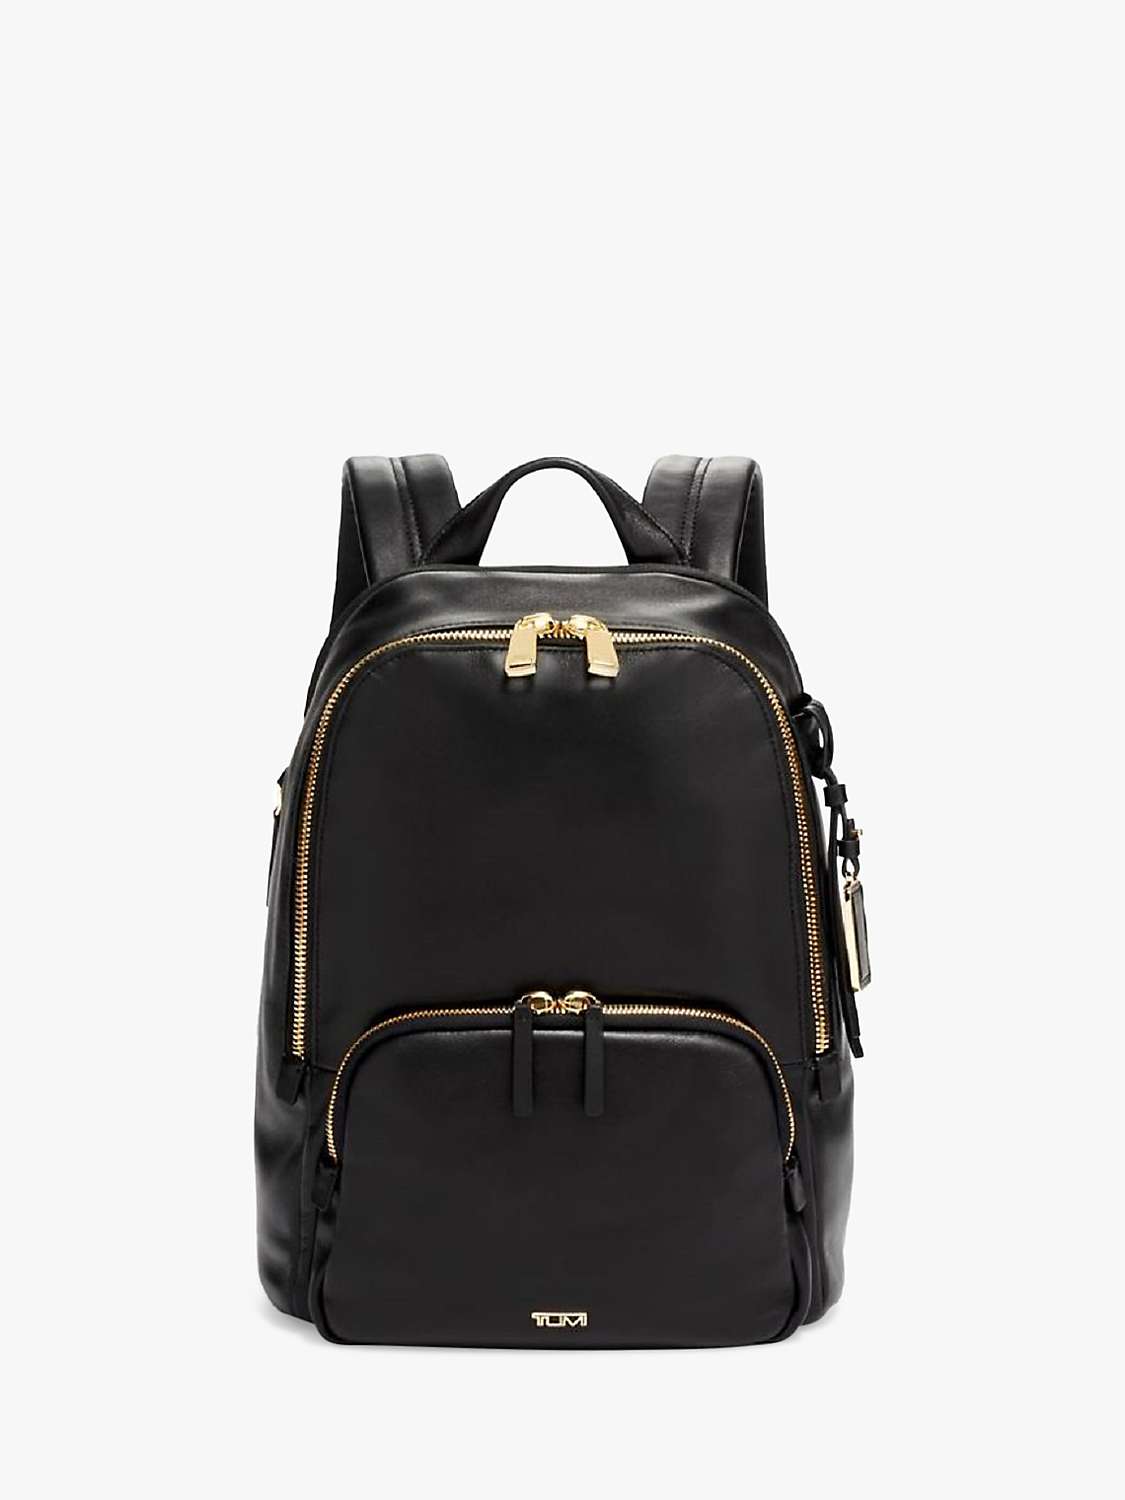 Buy TUMI Voyageur Hannah Leather Backpack, Black Online at johnlewis.com